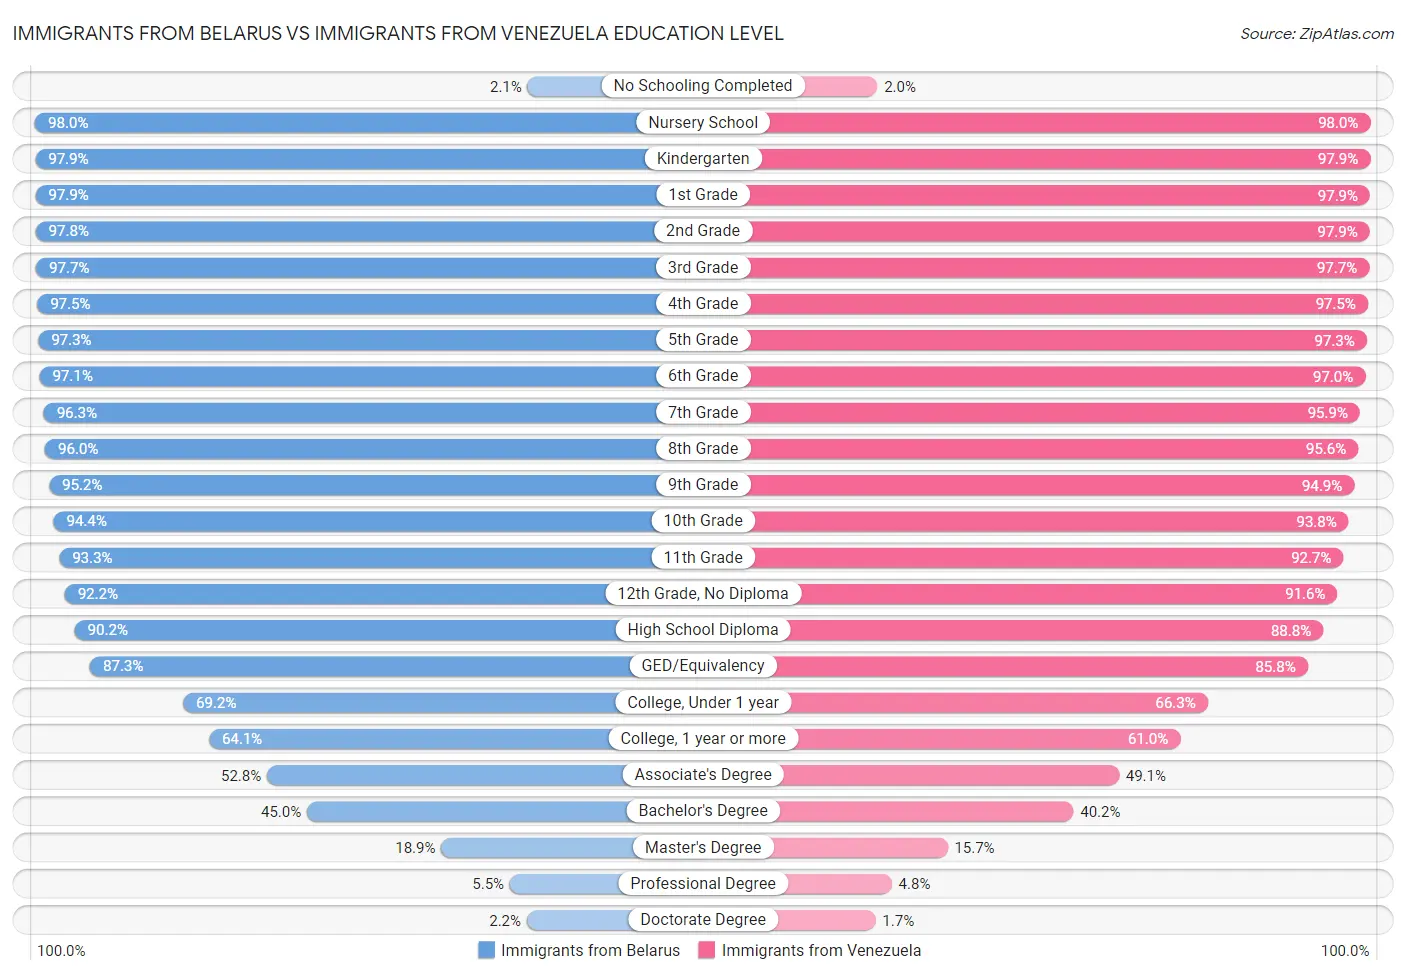 Immigrants from Belarus vs Immigrants from Venezuela Education Level